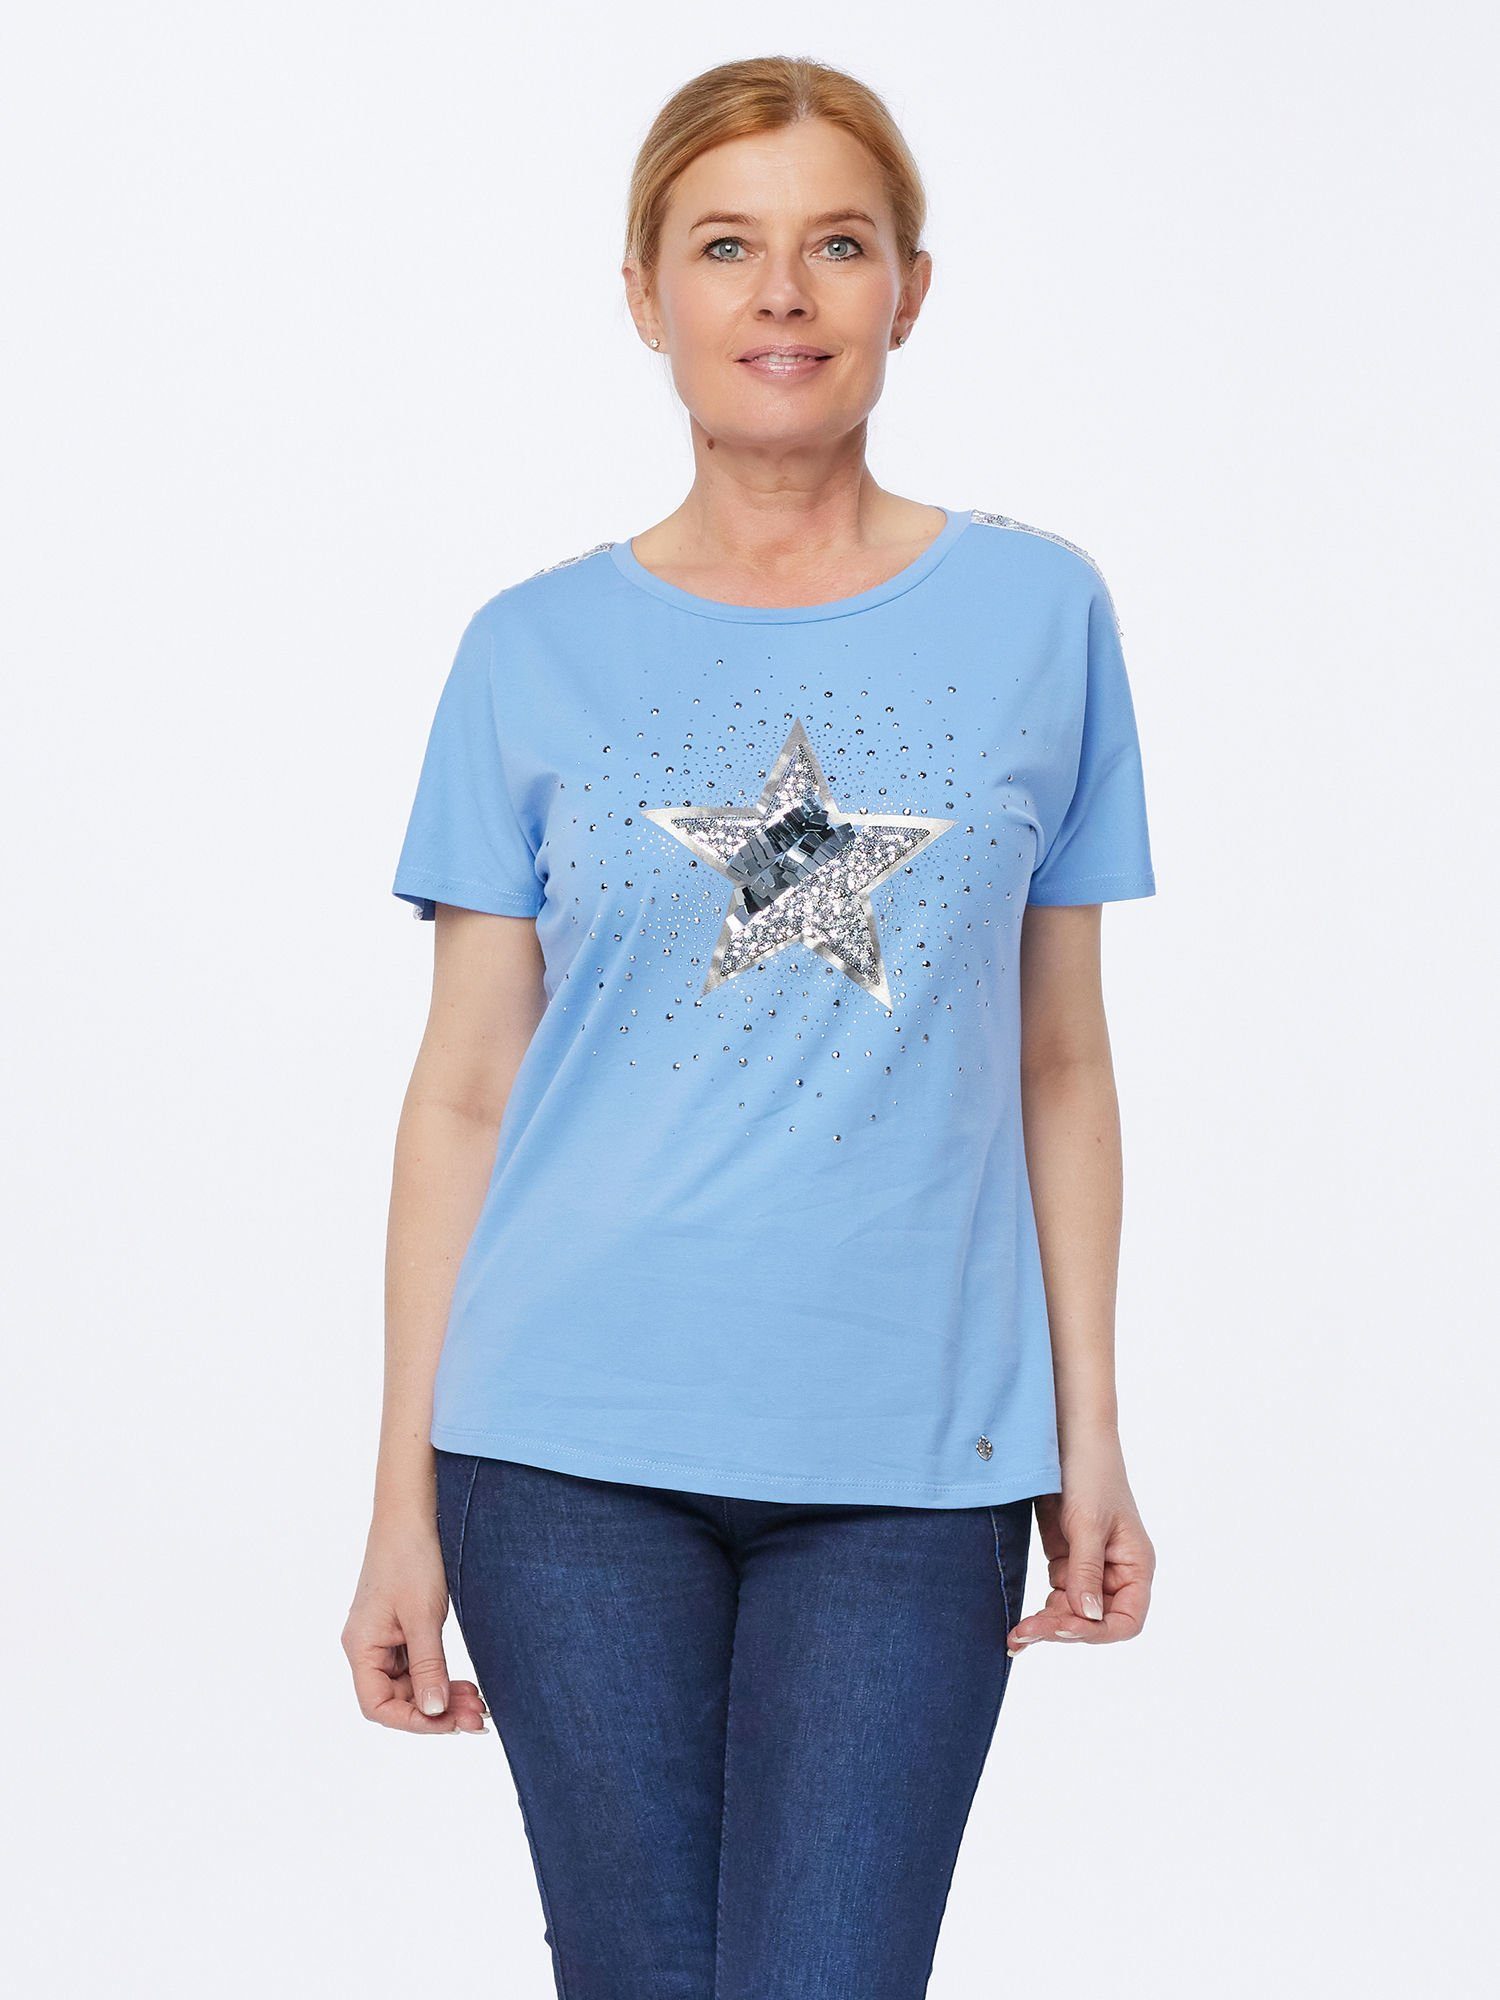 Christian Materne T-Shirt Kurzarmbluse mit Stern-Motiv blau